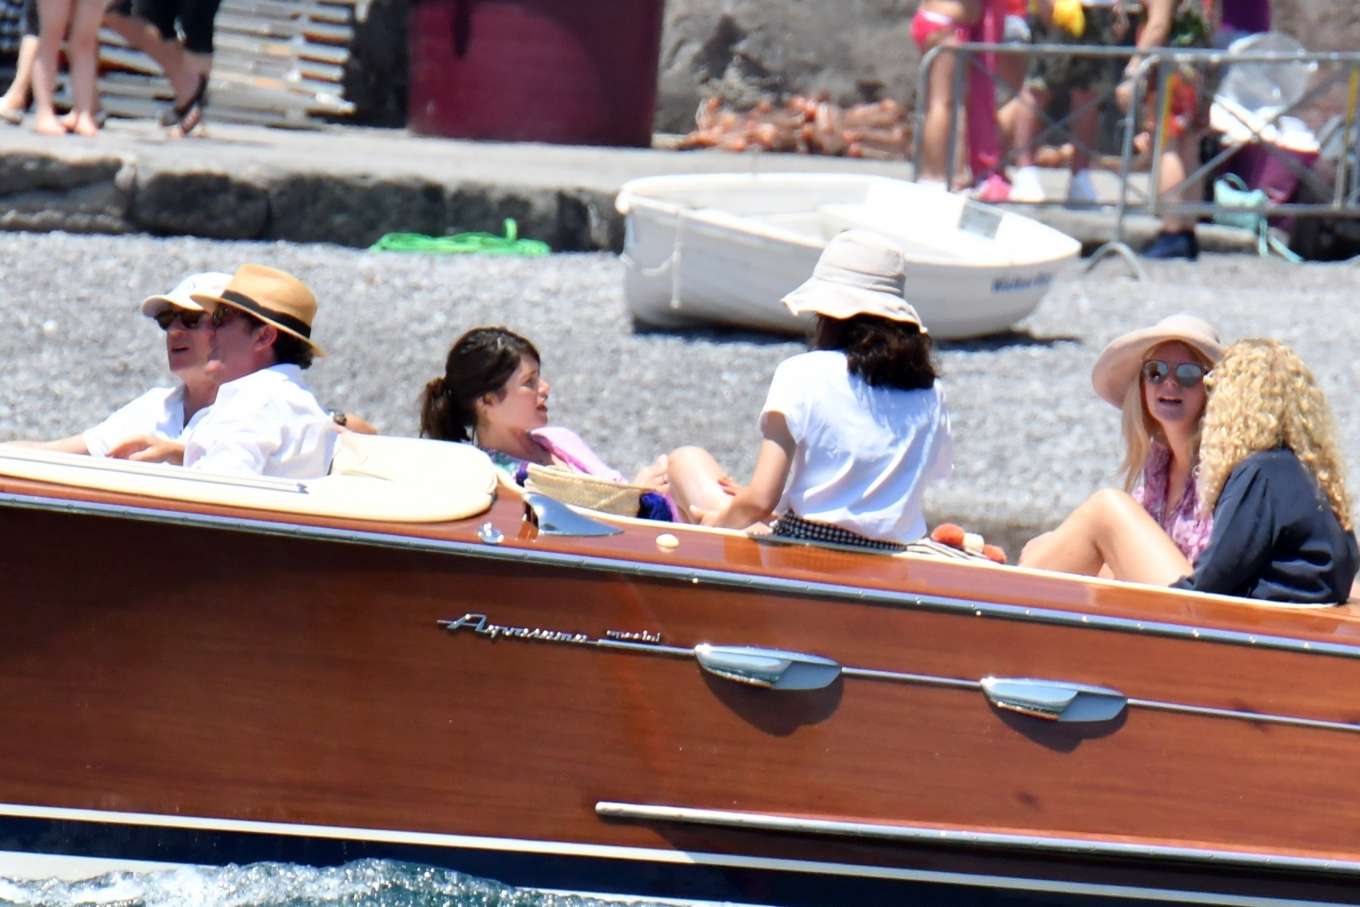 Gemma Arterton in Purple Summer Dress on holiday in Positano